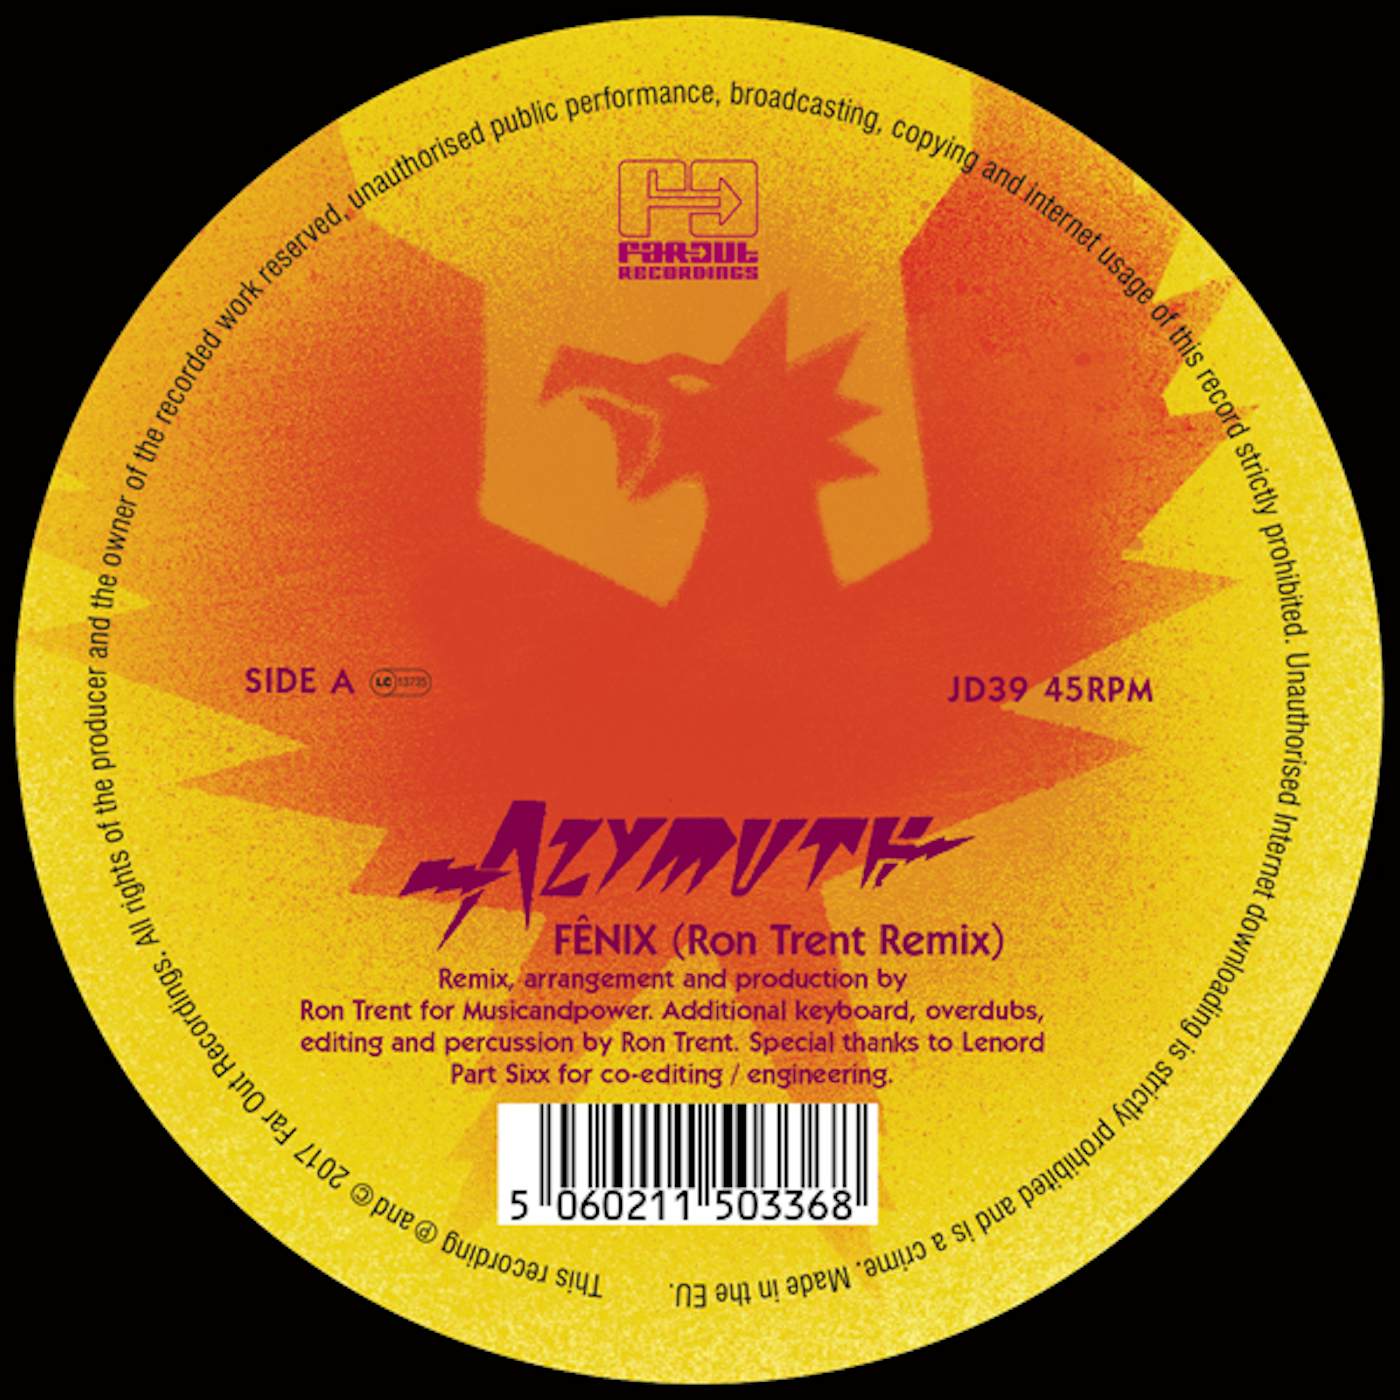 Azymuth FENIX (RON TRENT REMIX) Vinyl Record